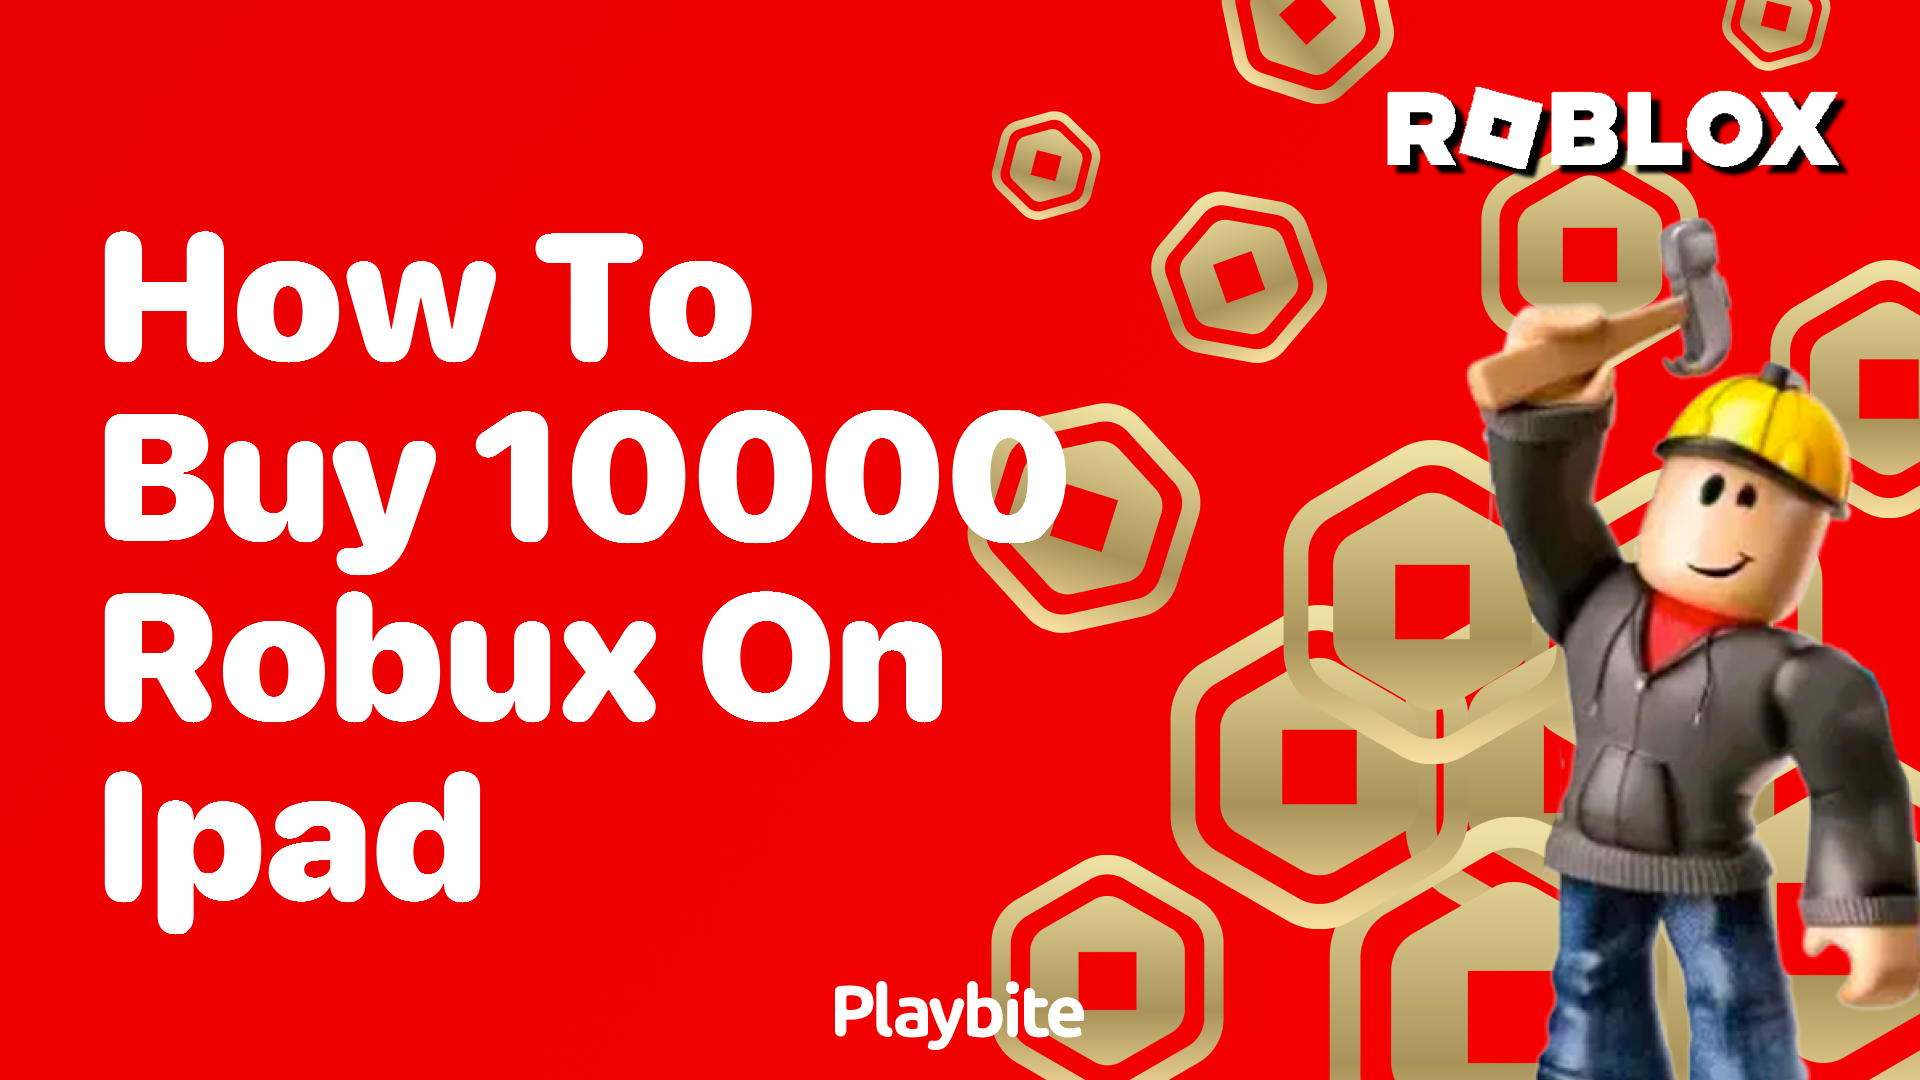 How to Buy 10,000 Robux on iPad